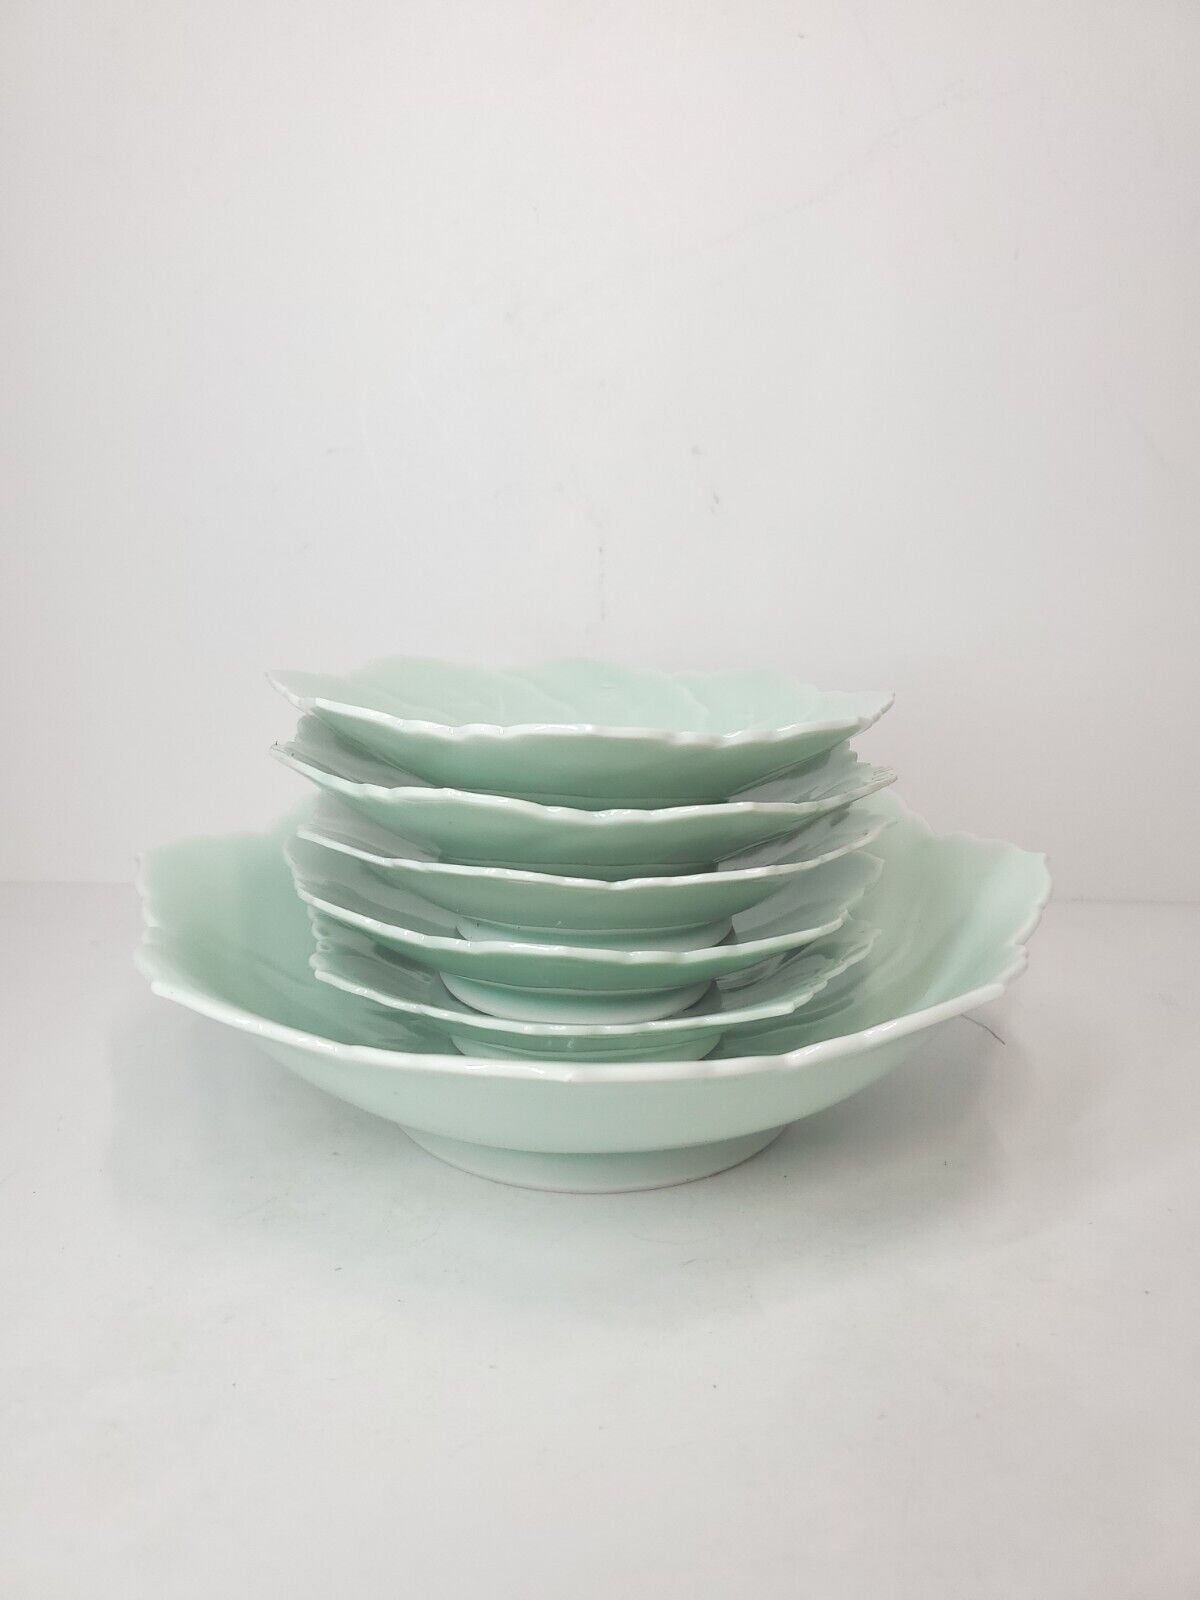 Celadon Cabbage Leaf Flower Dishes Bowls Made in Japan 6 Pcs. Rare HTF Mint 1950